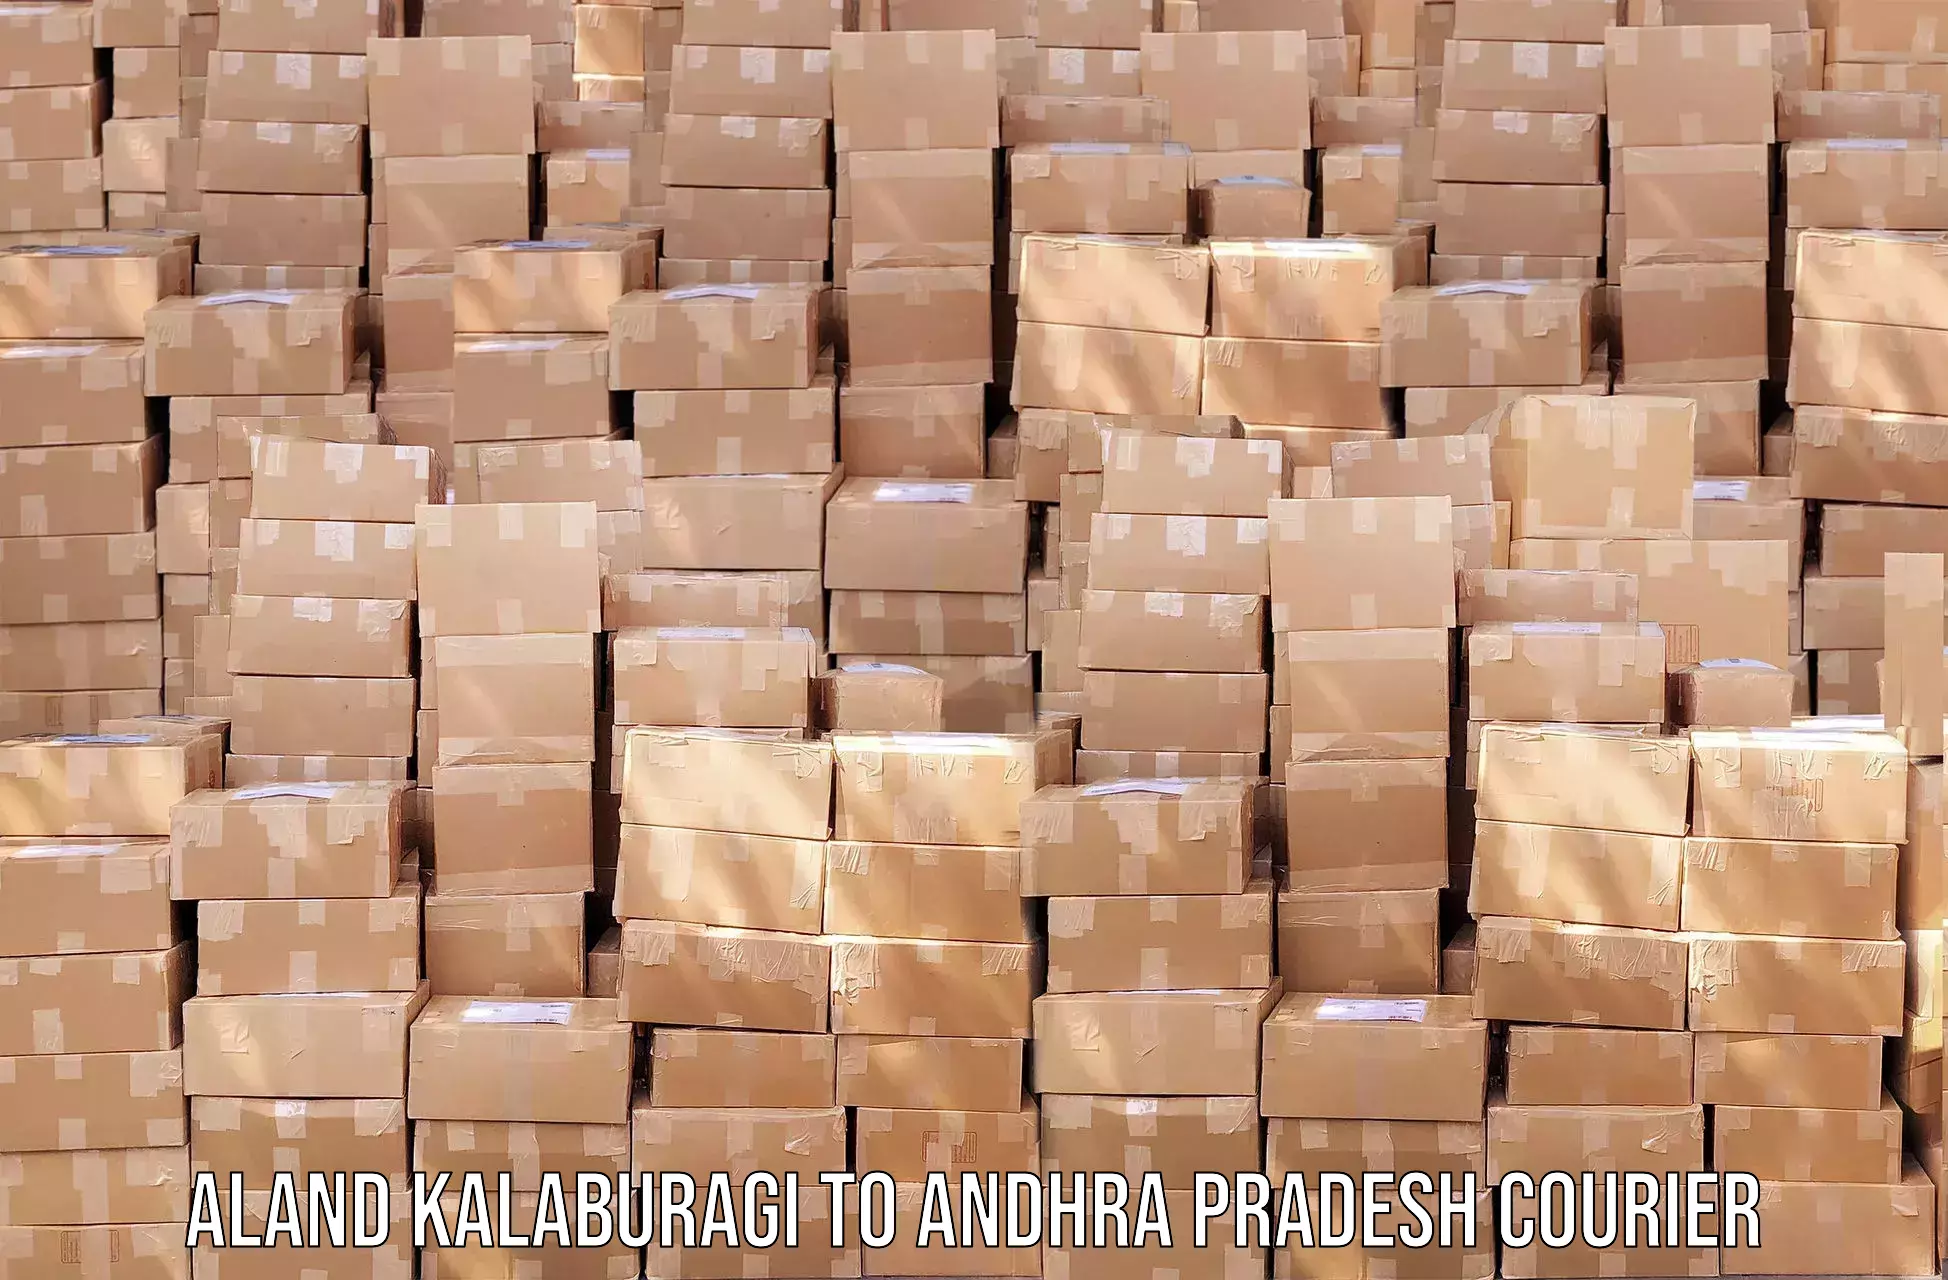 Courier service comparison Aland Kalaburagi to Palakonda